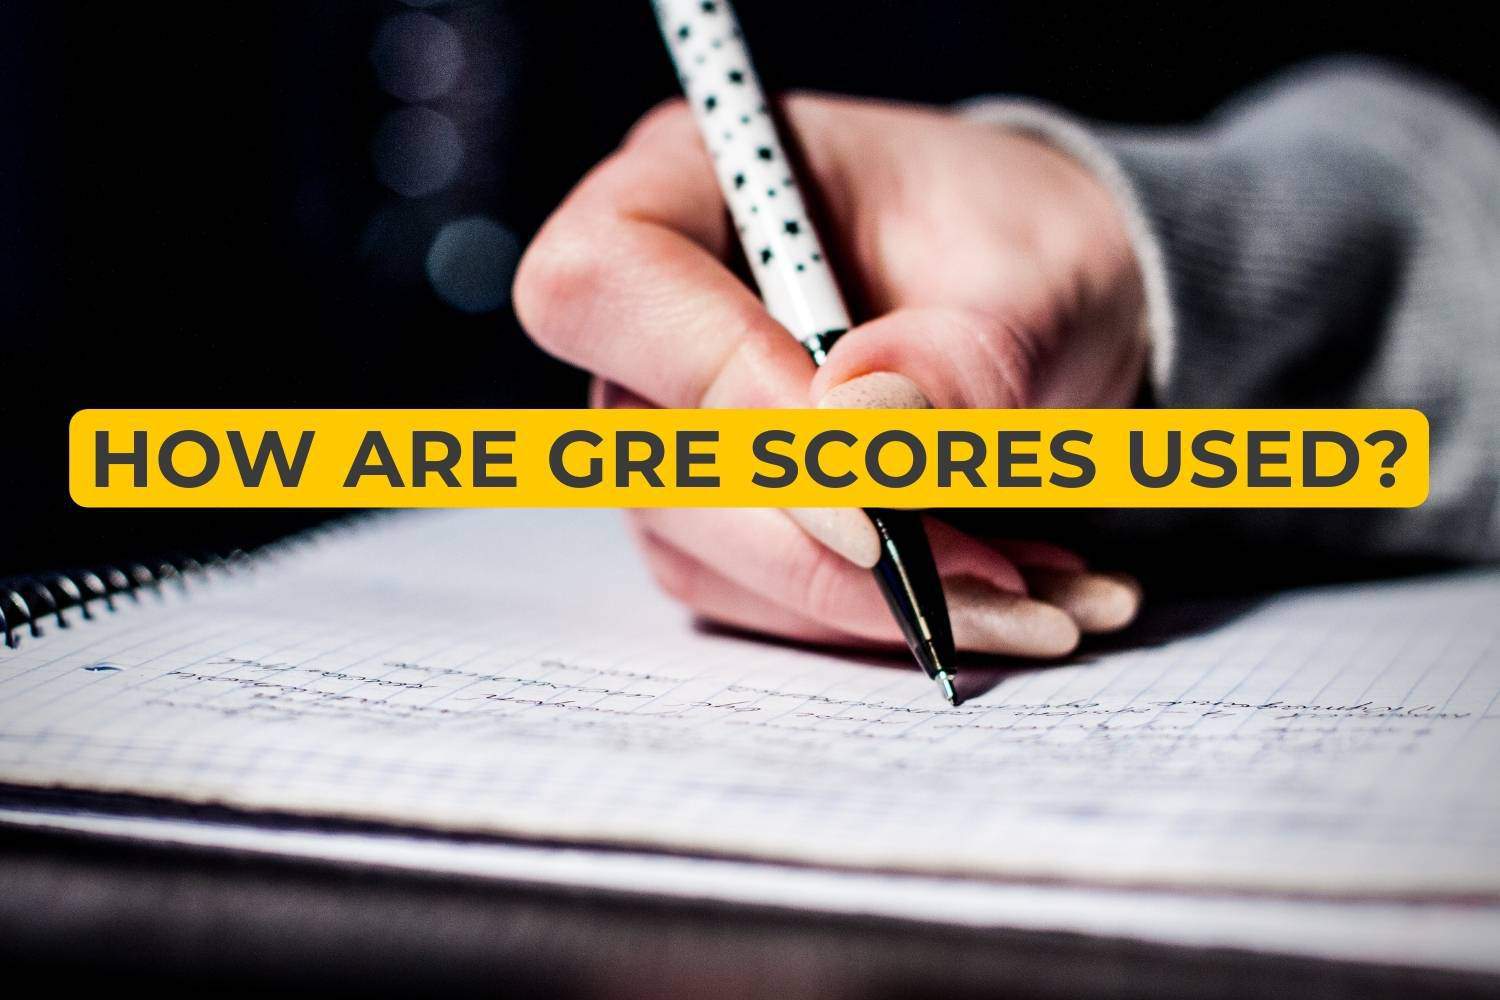 gre-test-scores-good-average-and-range-of-gre-score